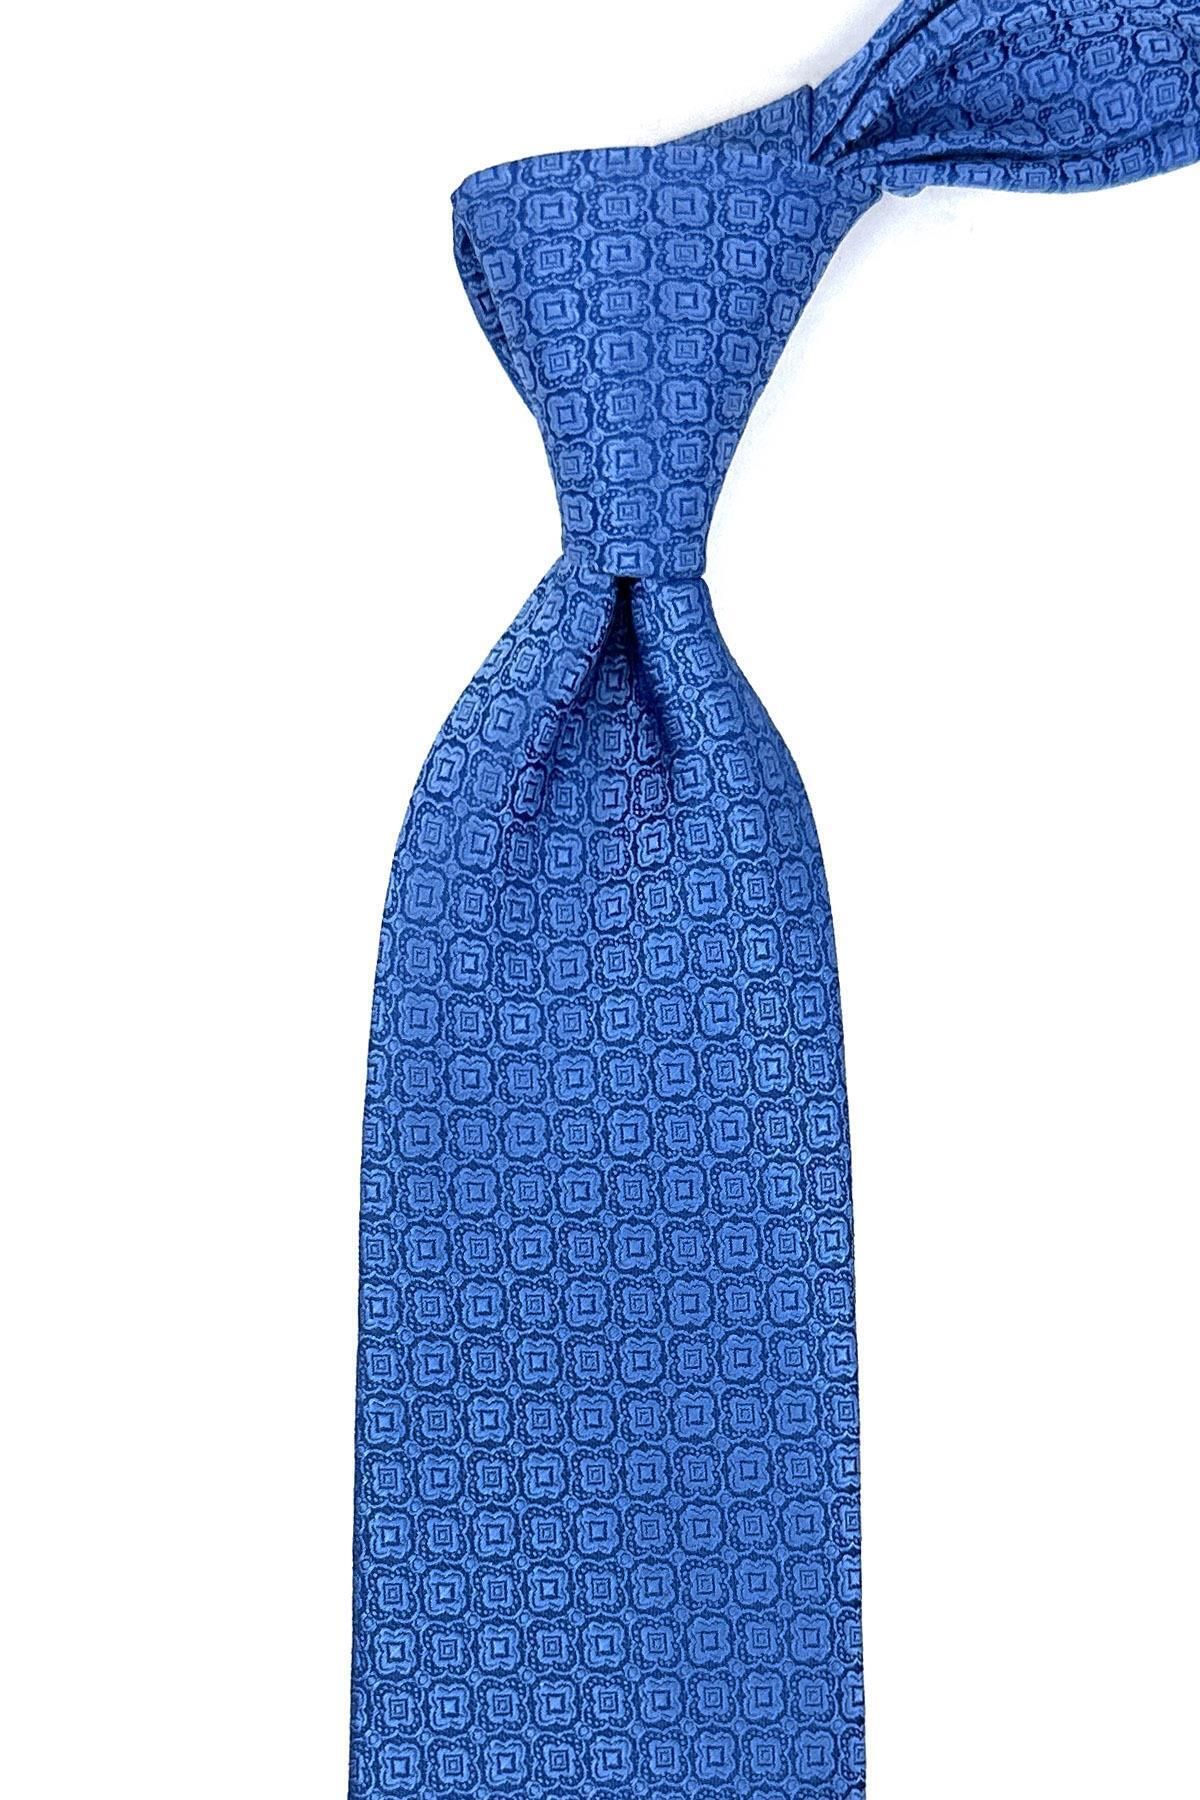 Kravatkolik Açık Mavi Motif Desen Mendilli Klasik Kravat KK11970